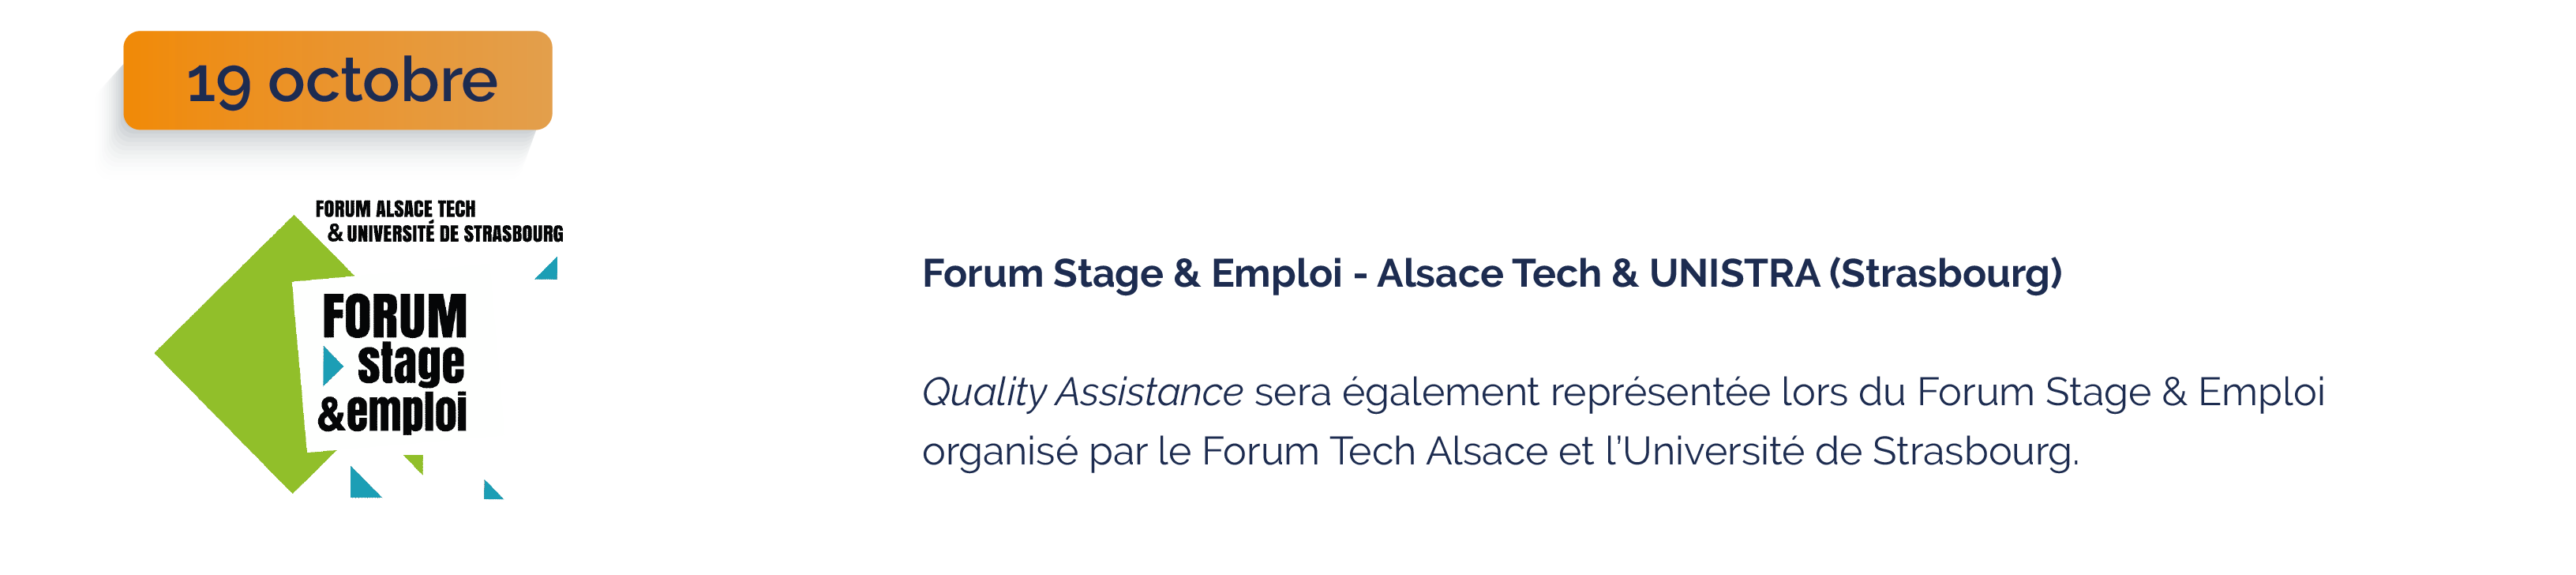 Forum Stage & Emploi Alsace Tech & UNISTRA 